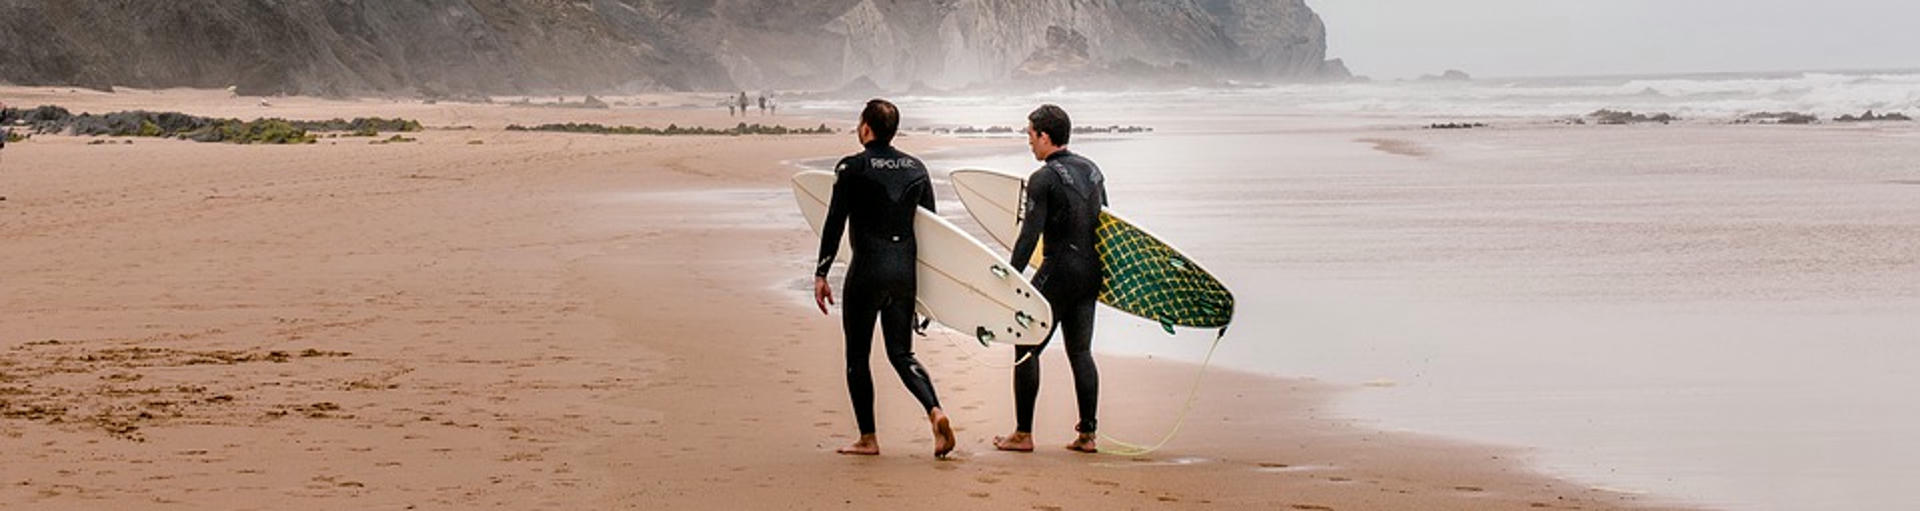 Zwei Surfer stehen in Portugal am Meer 